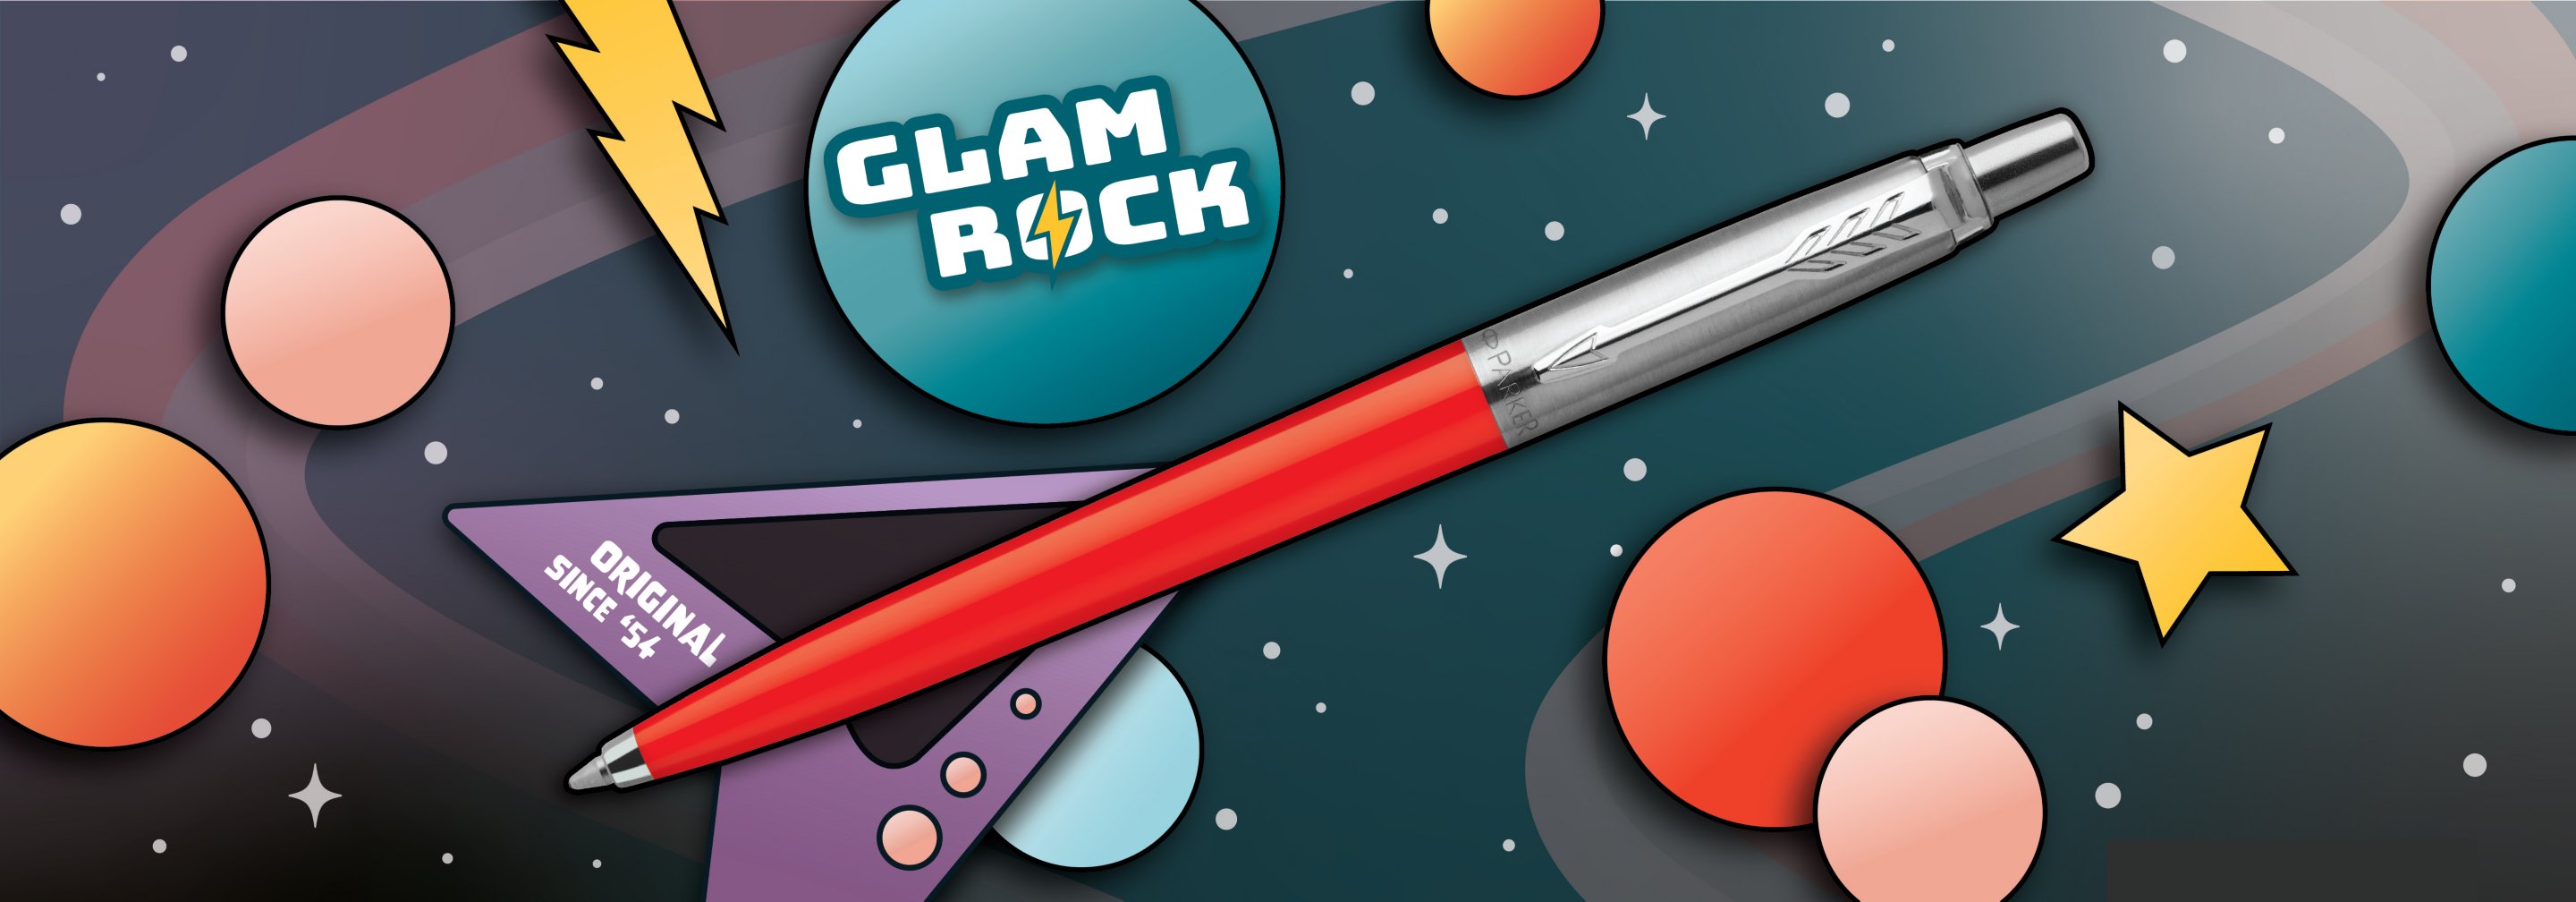 ballpoint pen inspired by glam rock